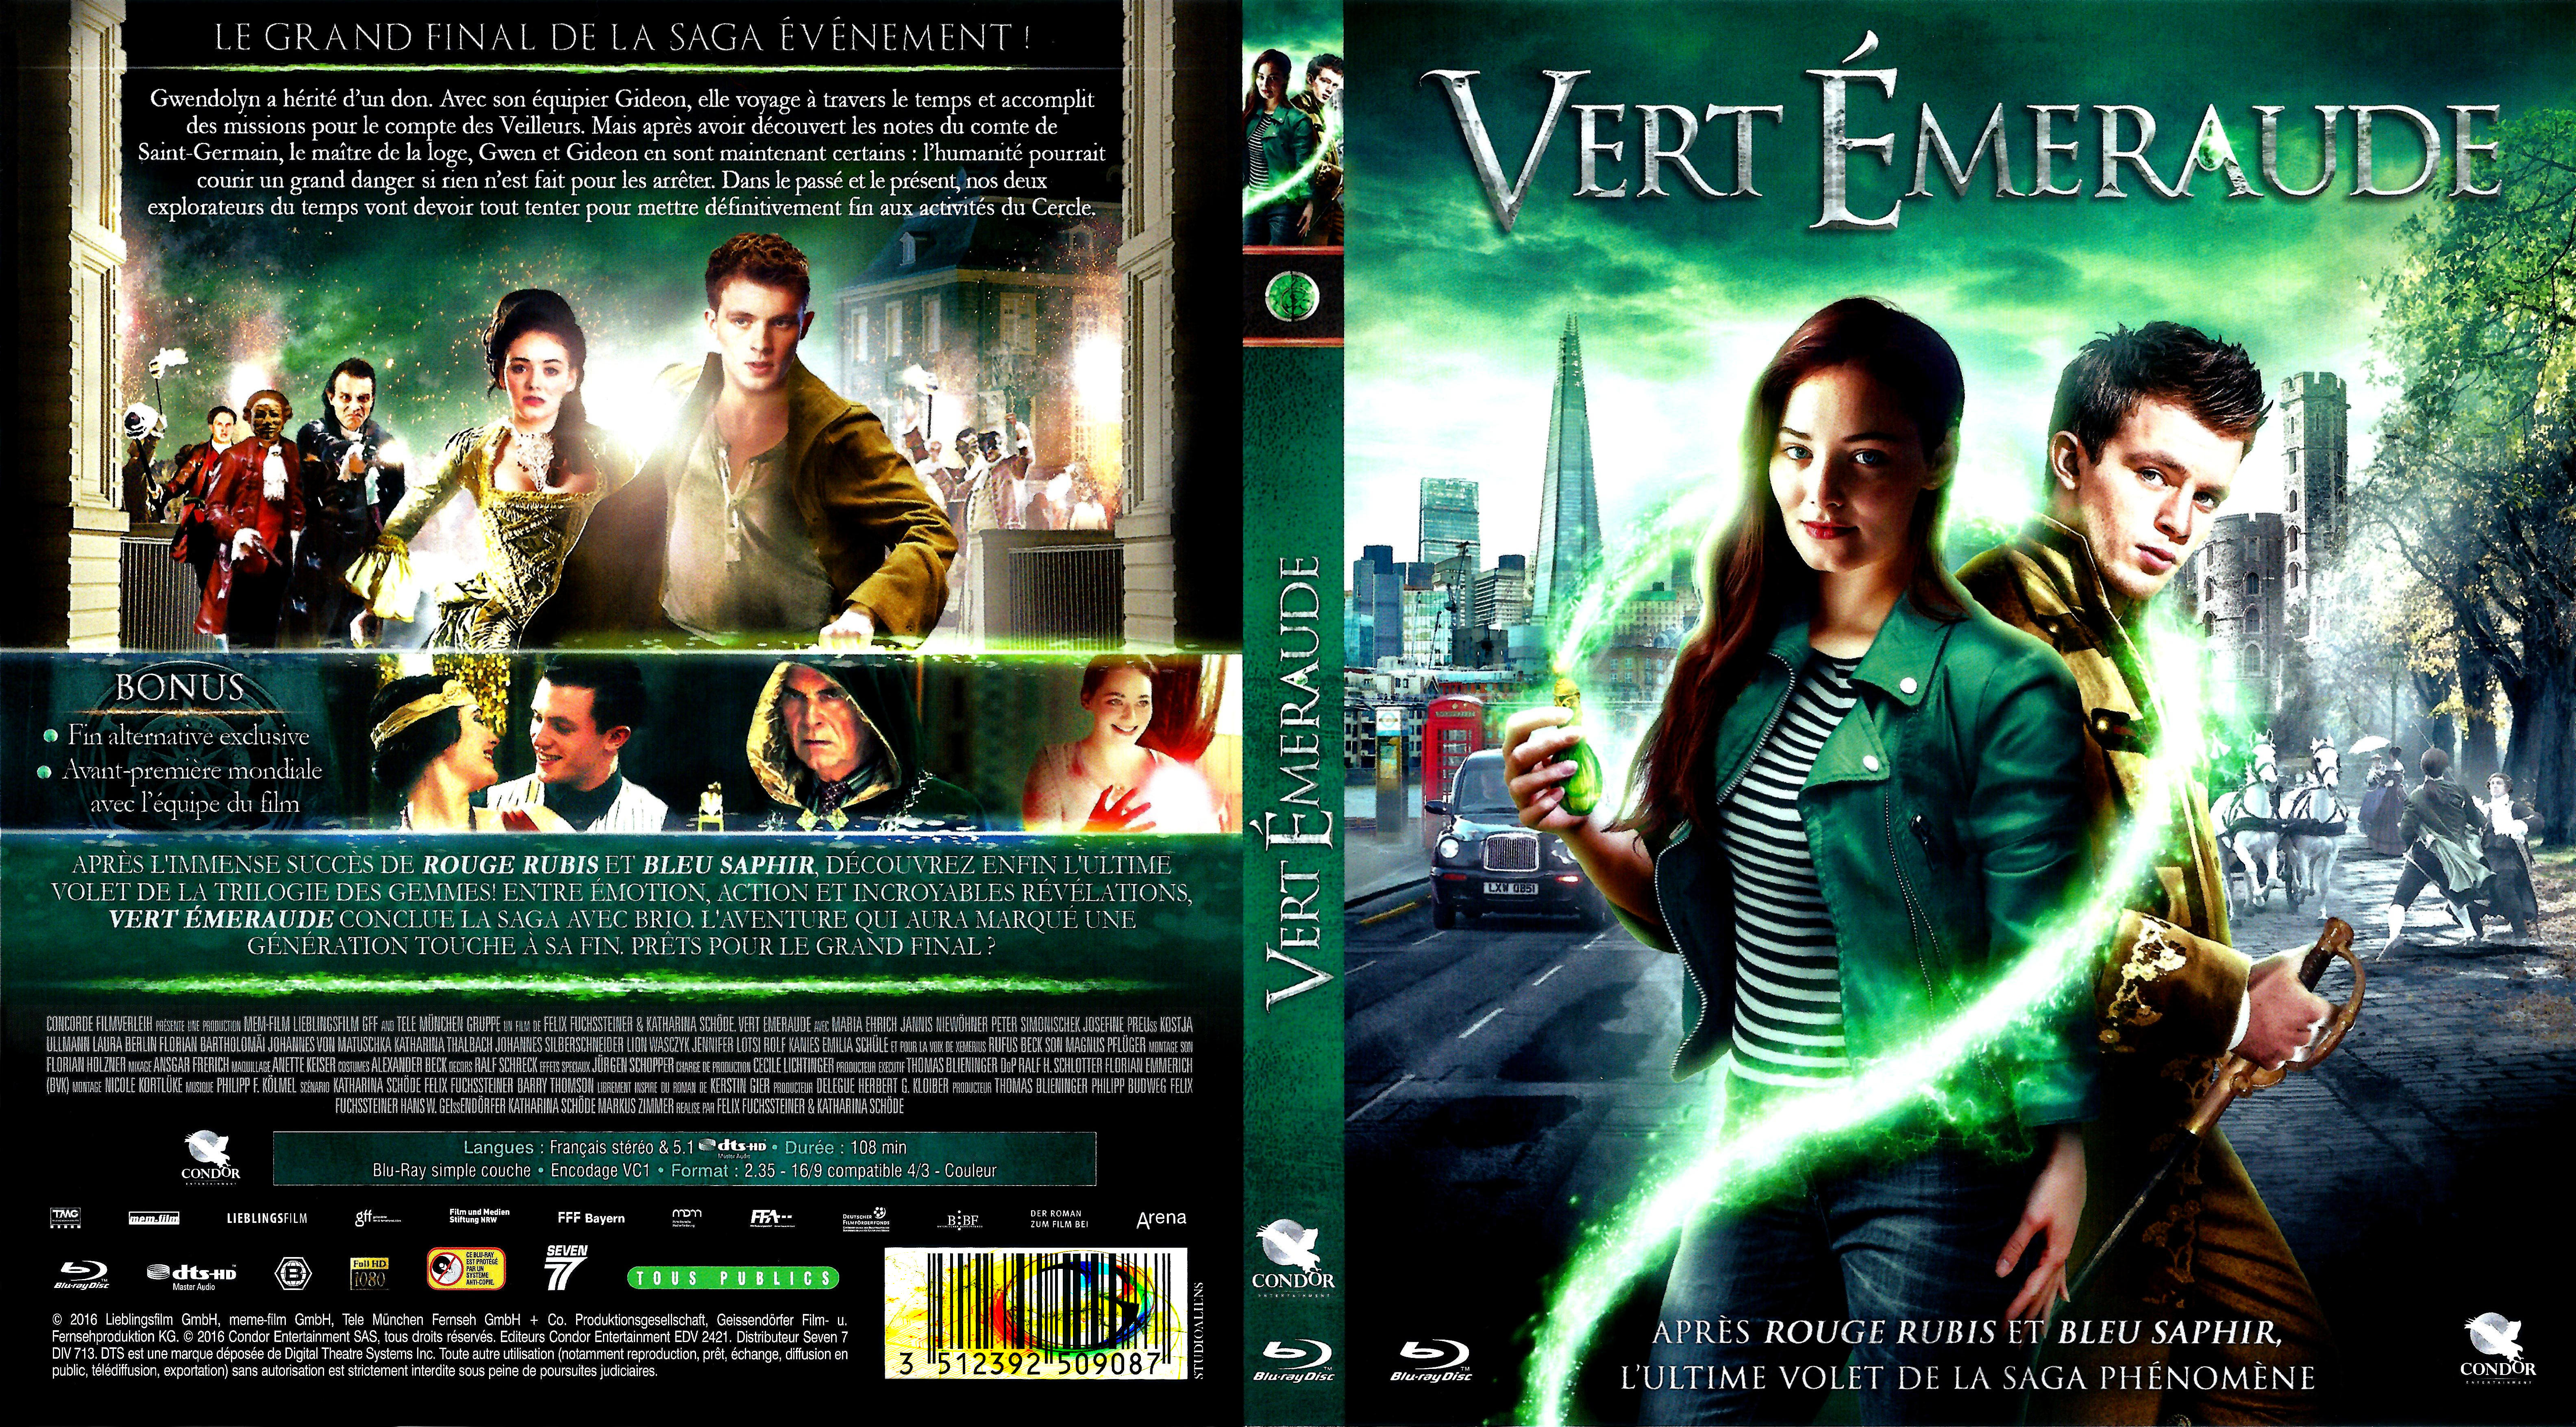 Jaquette DVD Vert meraude (BLU-RAY)